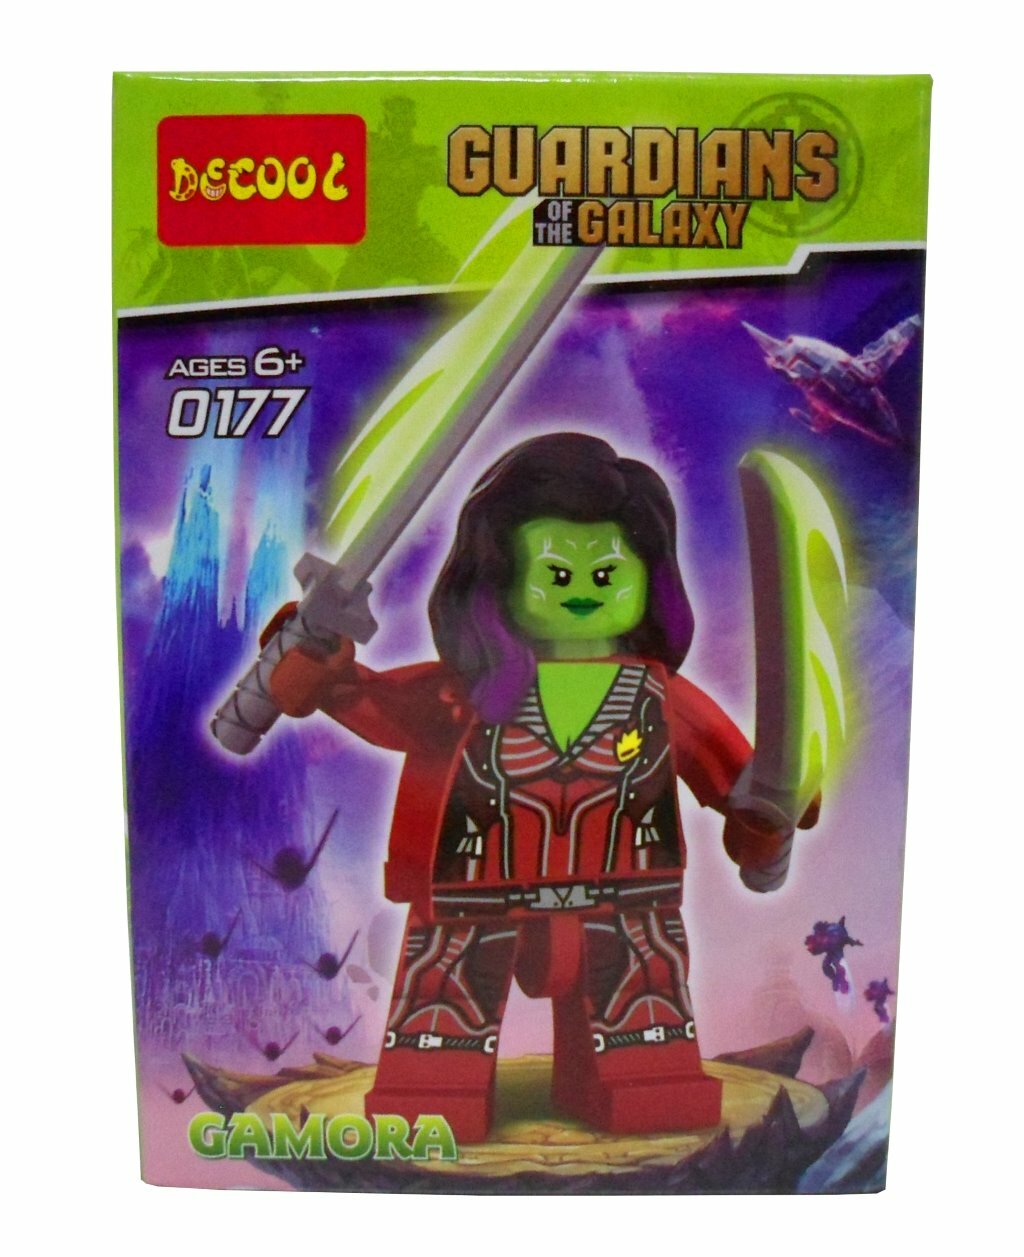 Конструкторский набор DECOOL "Guardians of the galaxy. Gamora" JM12271/0177